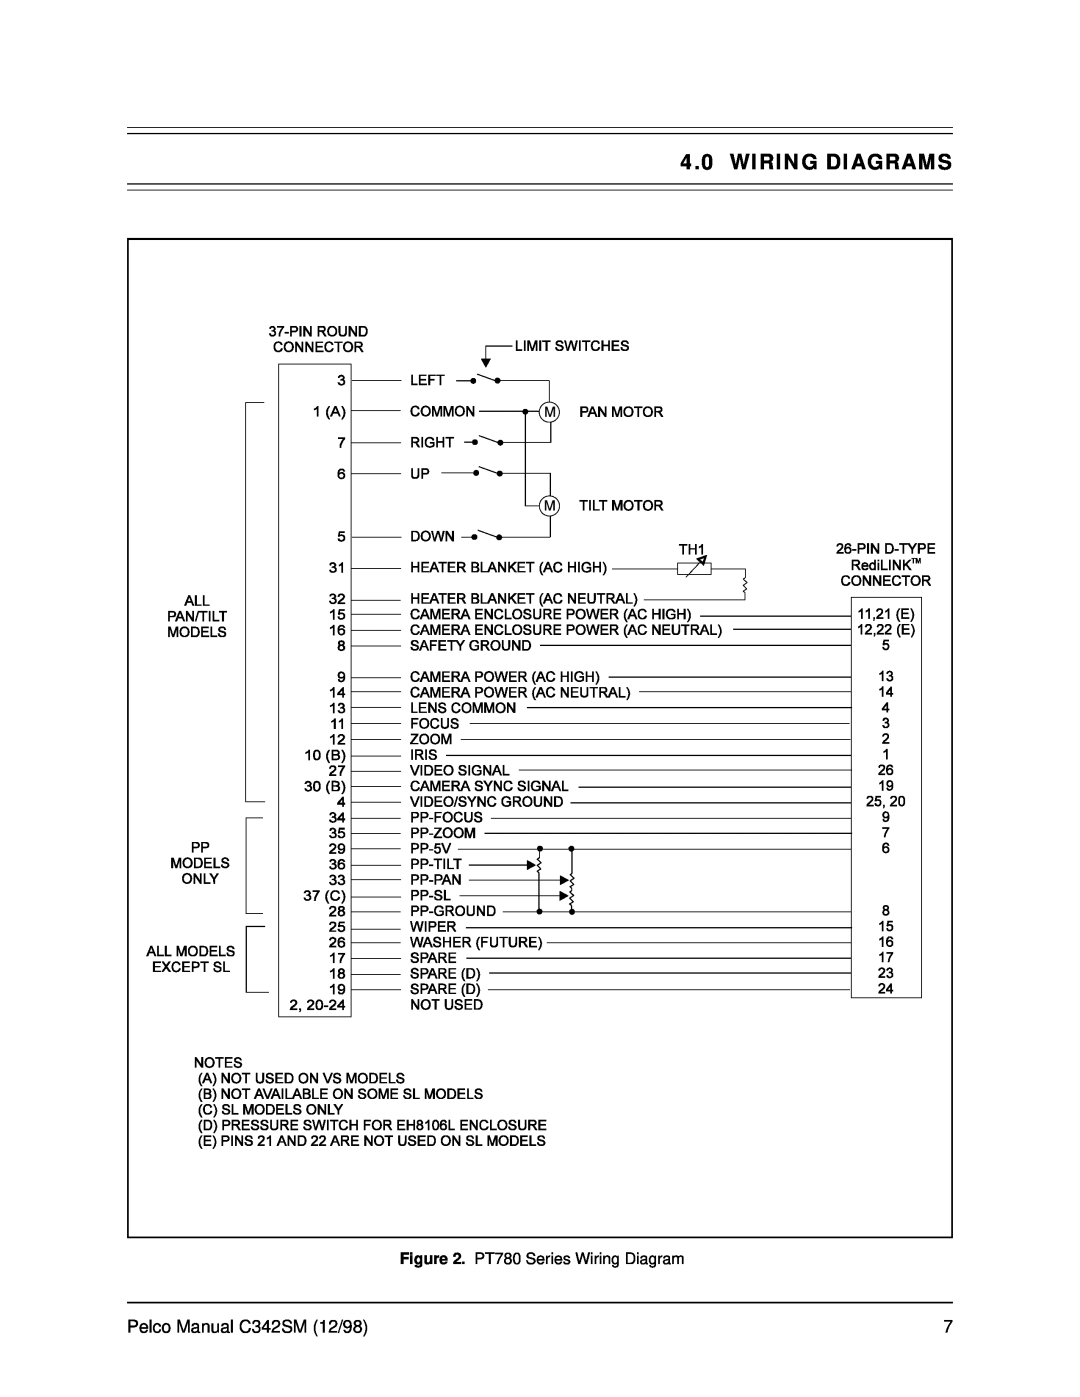 Pelco service manual Wiring Diagrams, PT780 Series Wiring Diagram, Pelco Manual C342SM 12/98 